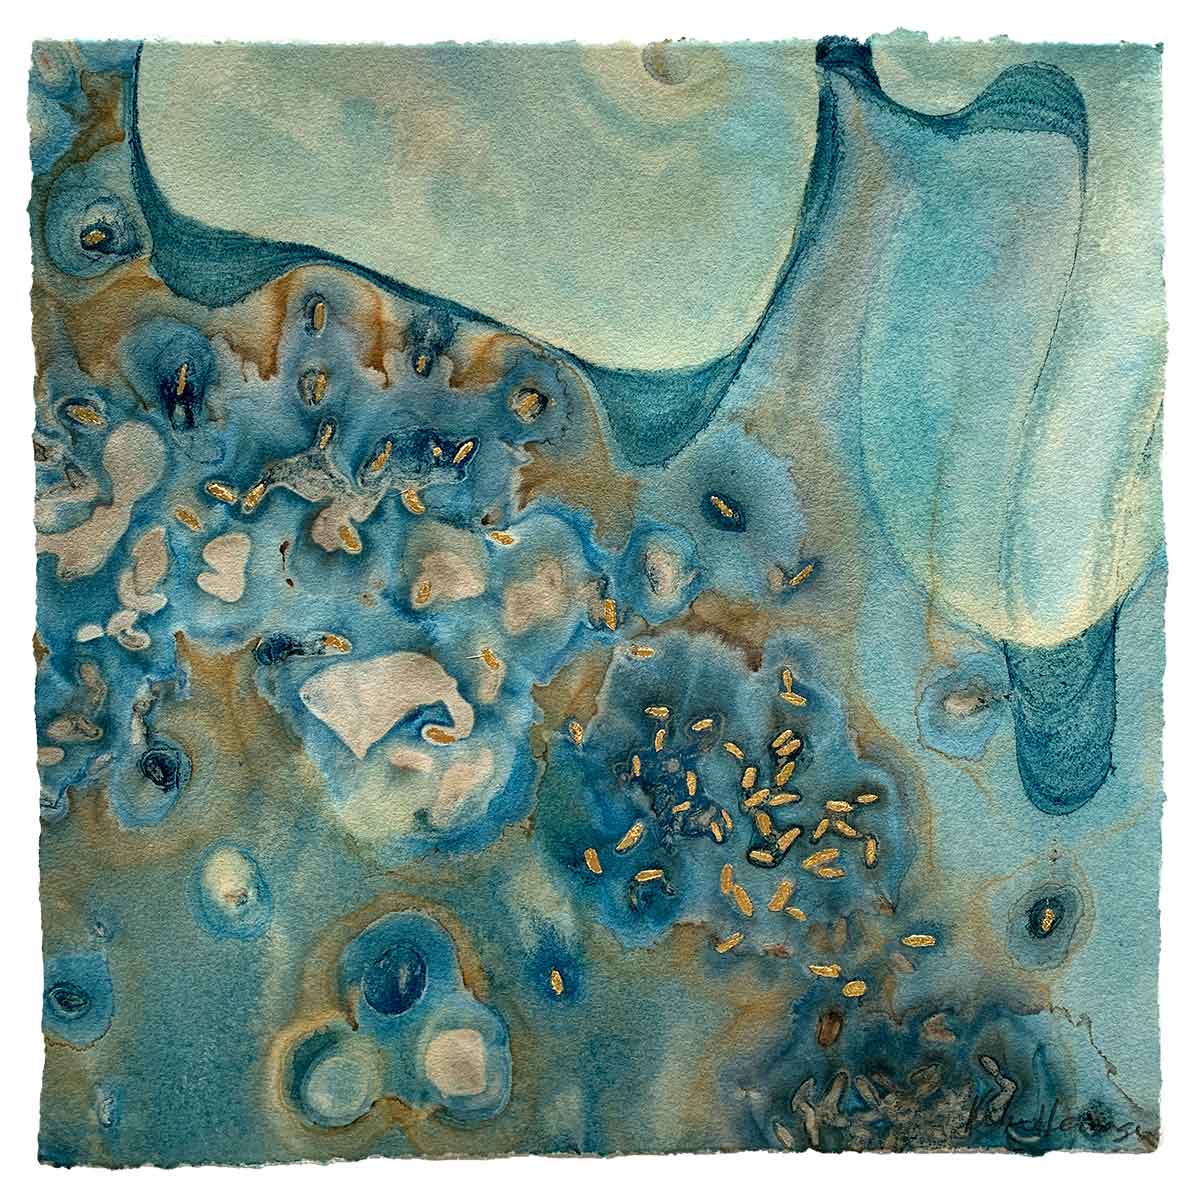 Water's Harvest 2 - Cyanotype - Kim Herringe